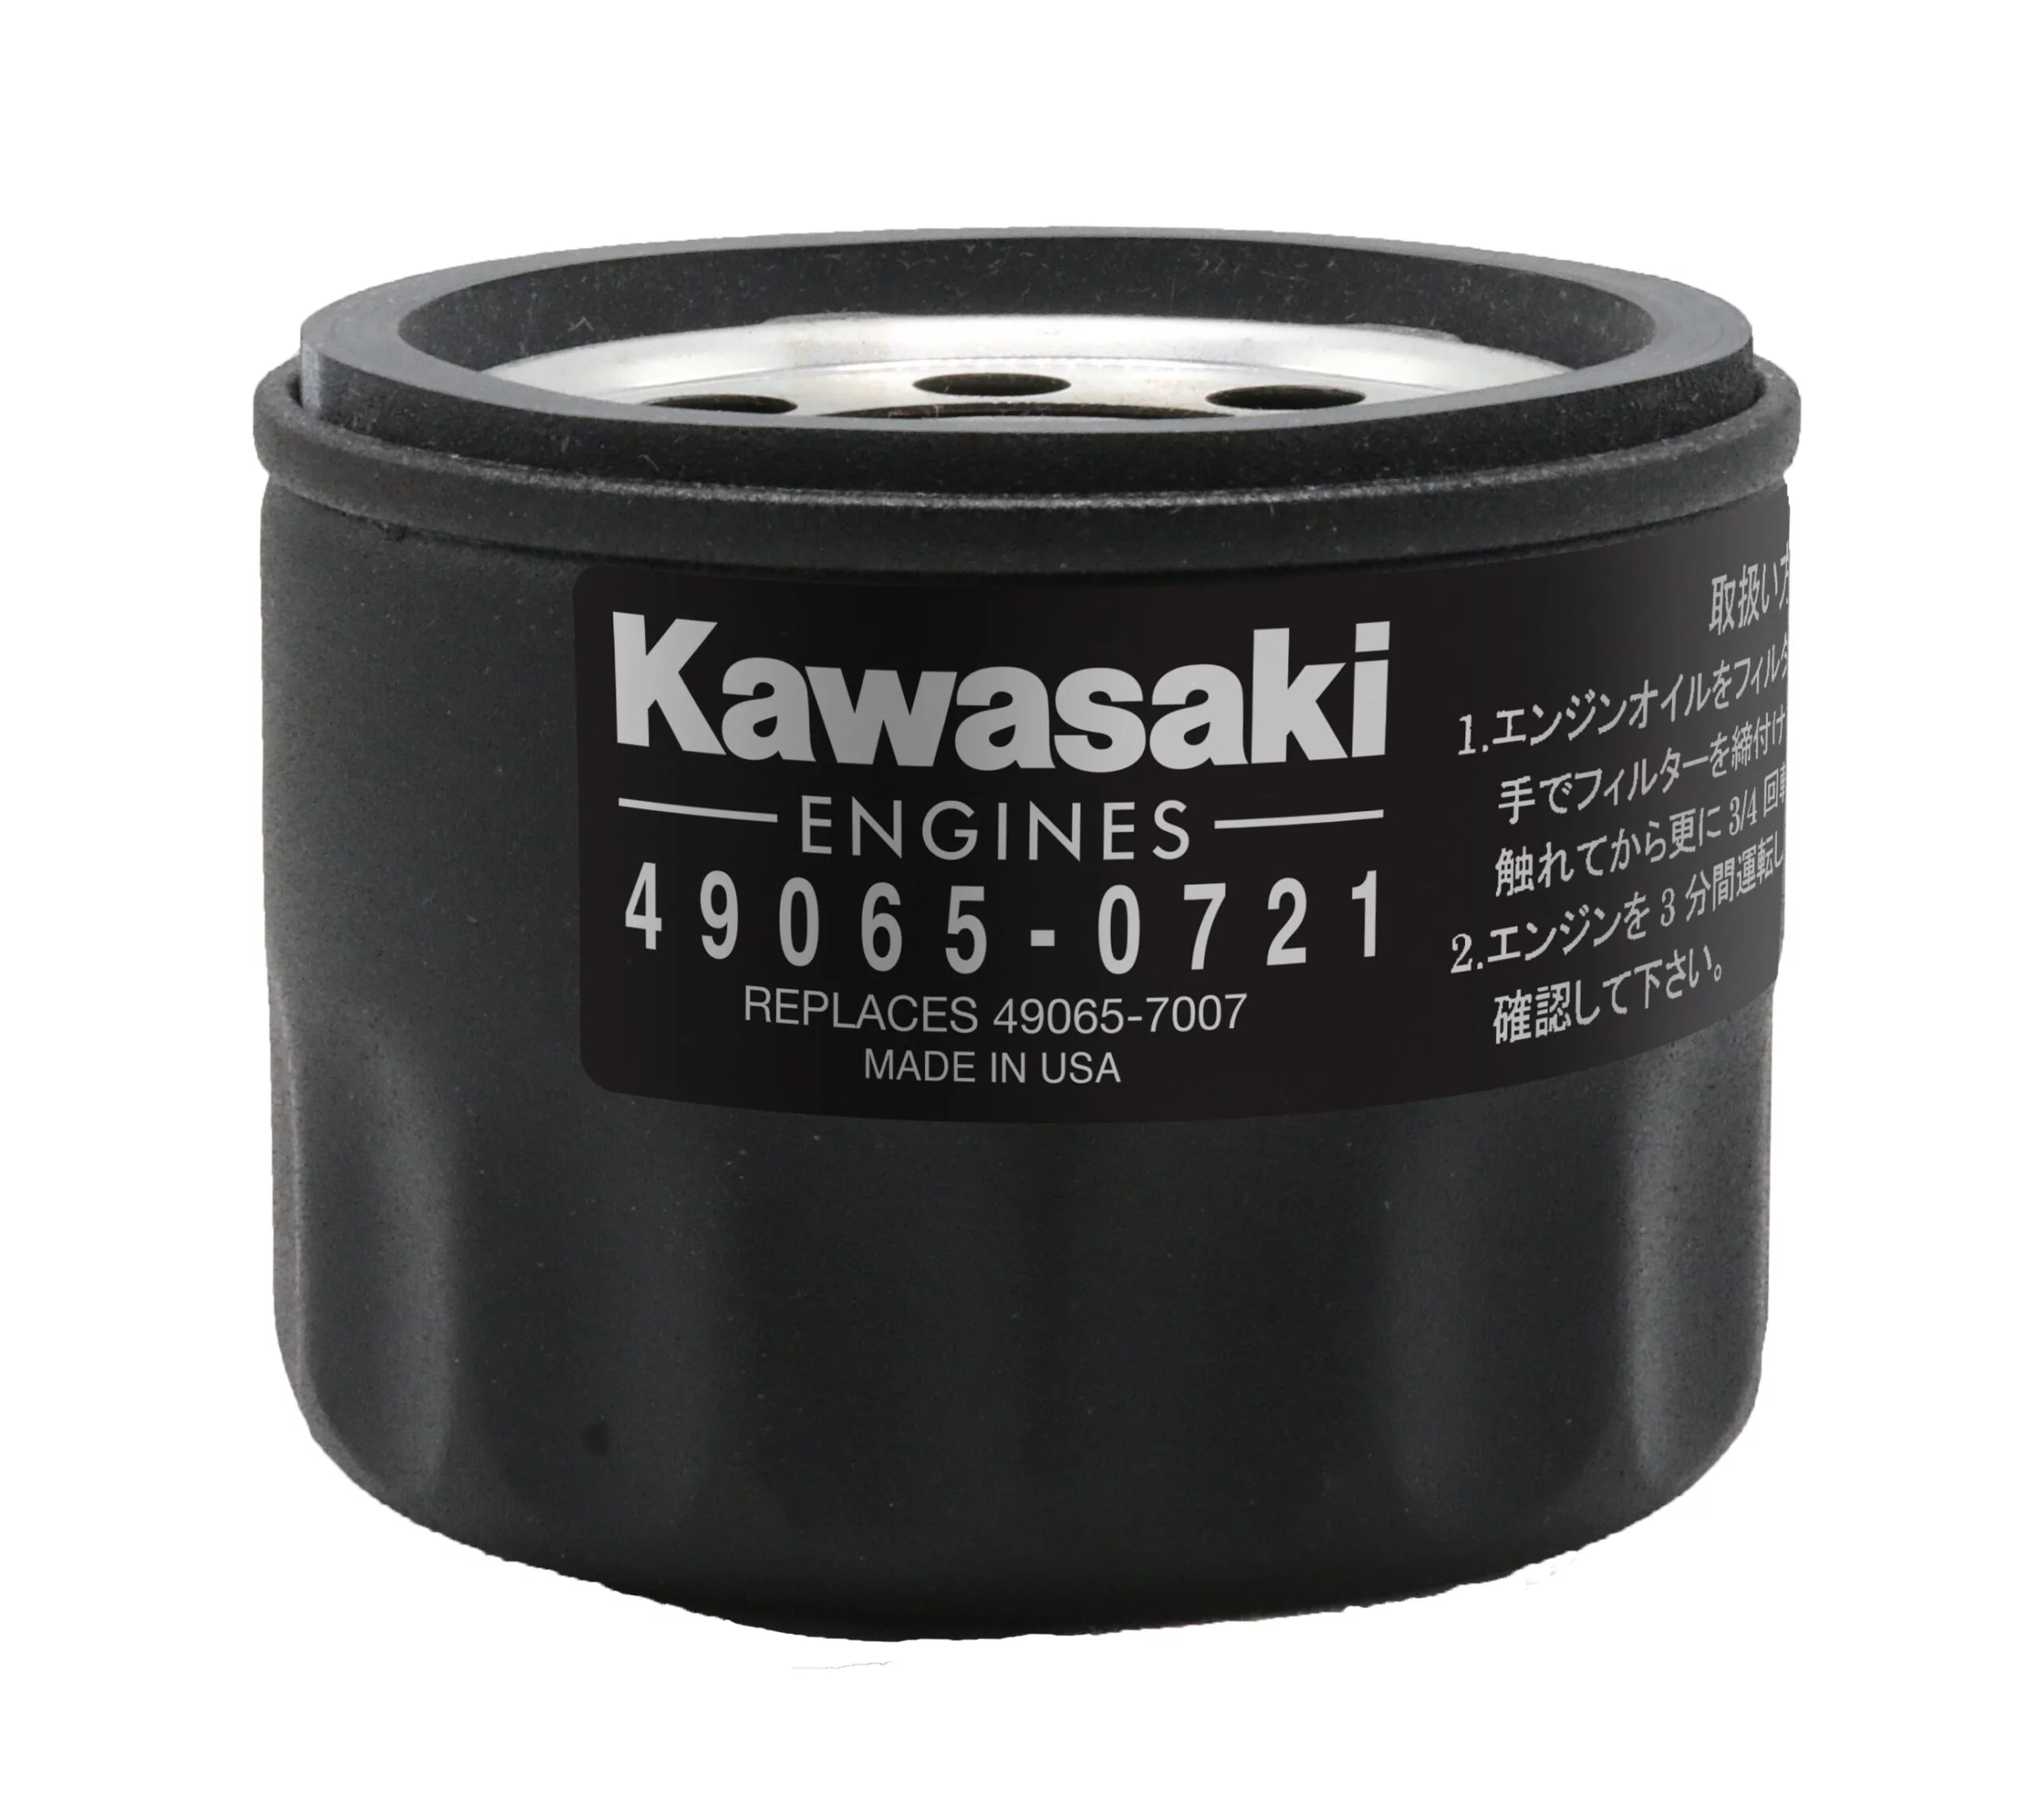 Kawasaki Oil Filter 49065-0721 Case of 12 OEM Oil Filters (replaces 49065-7007)